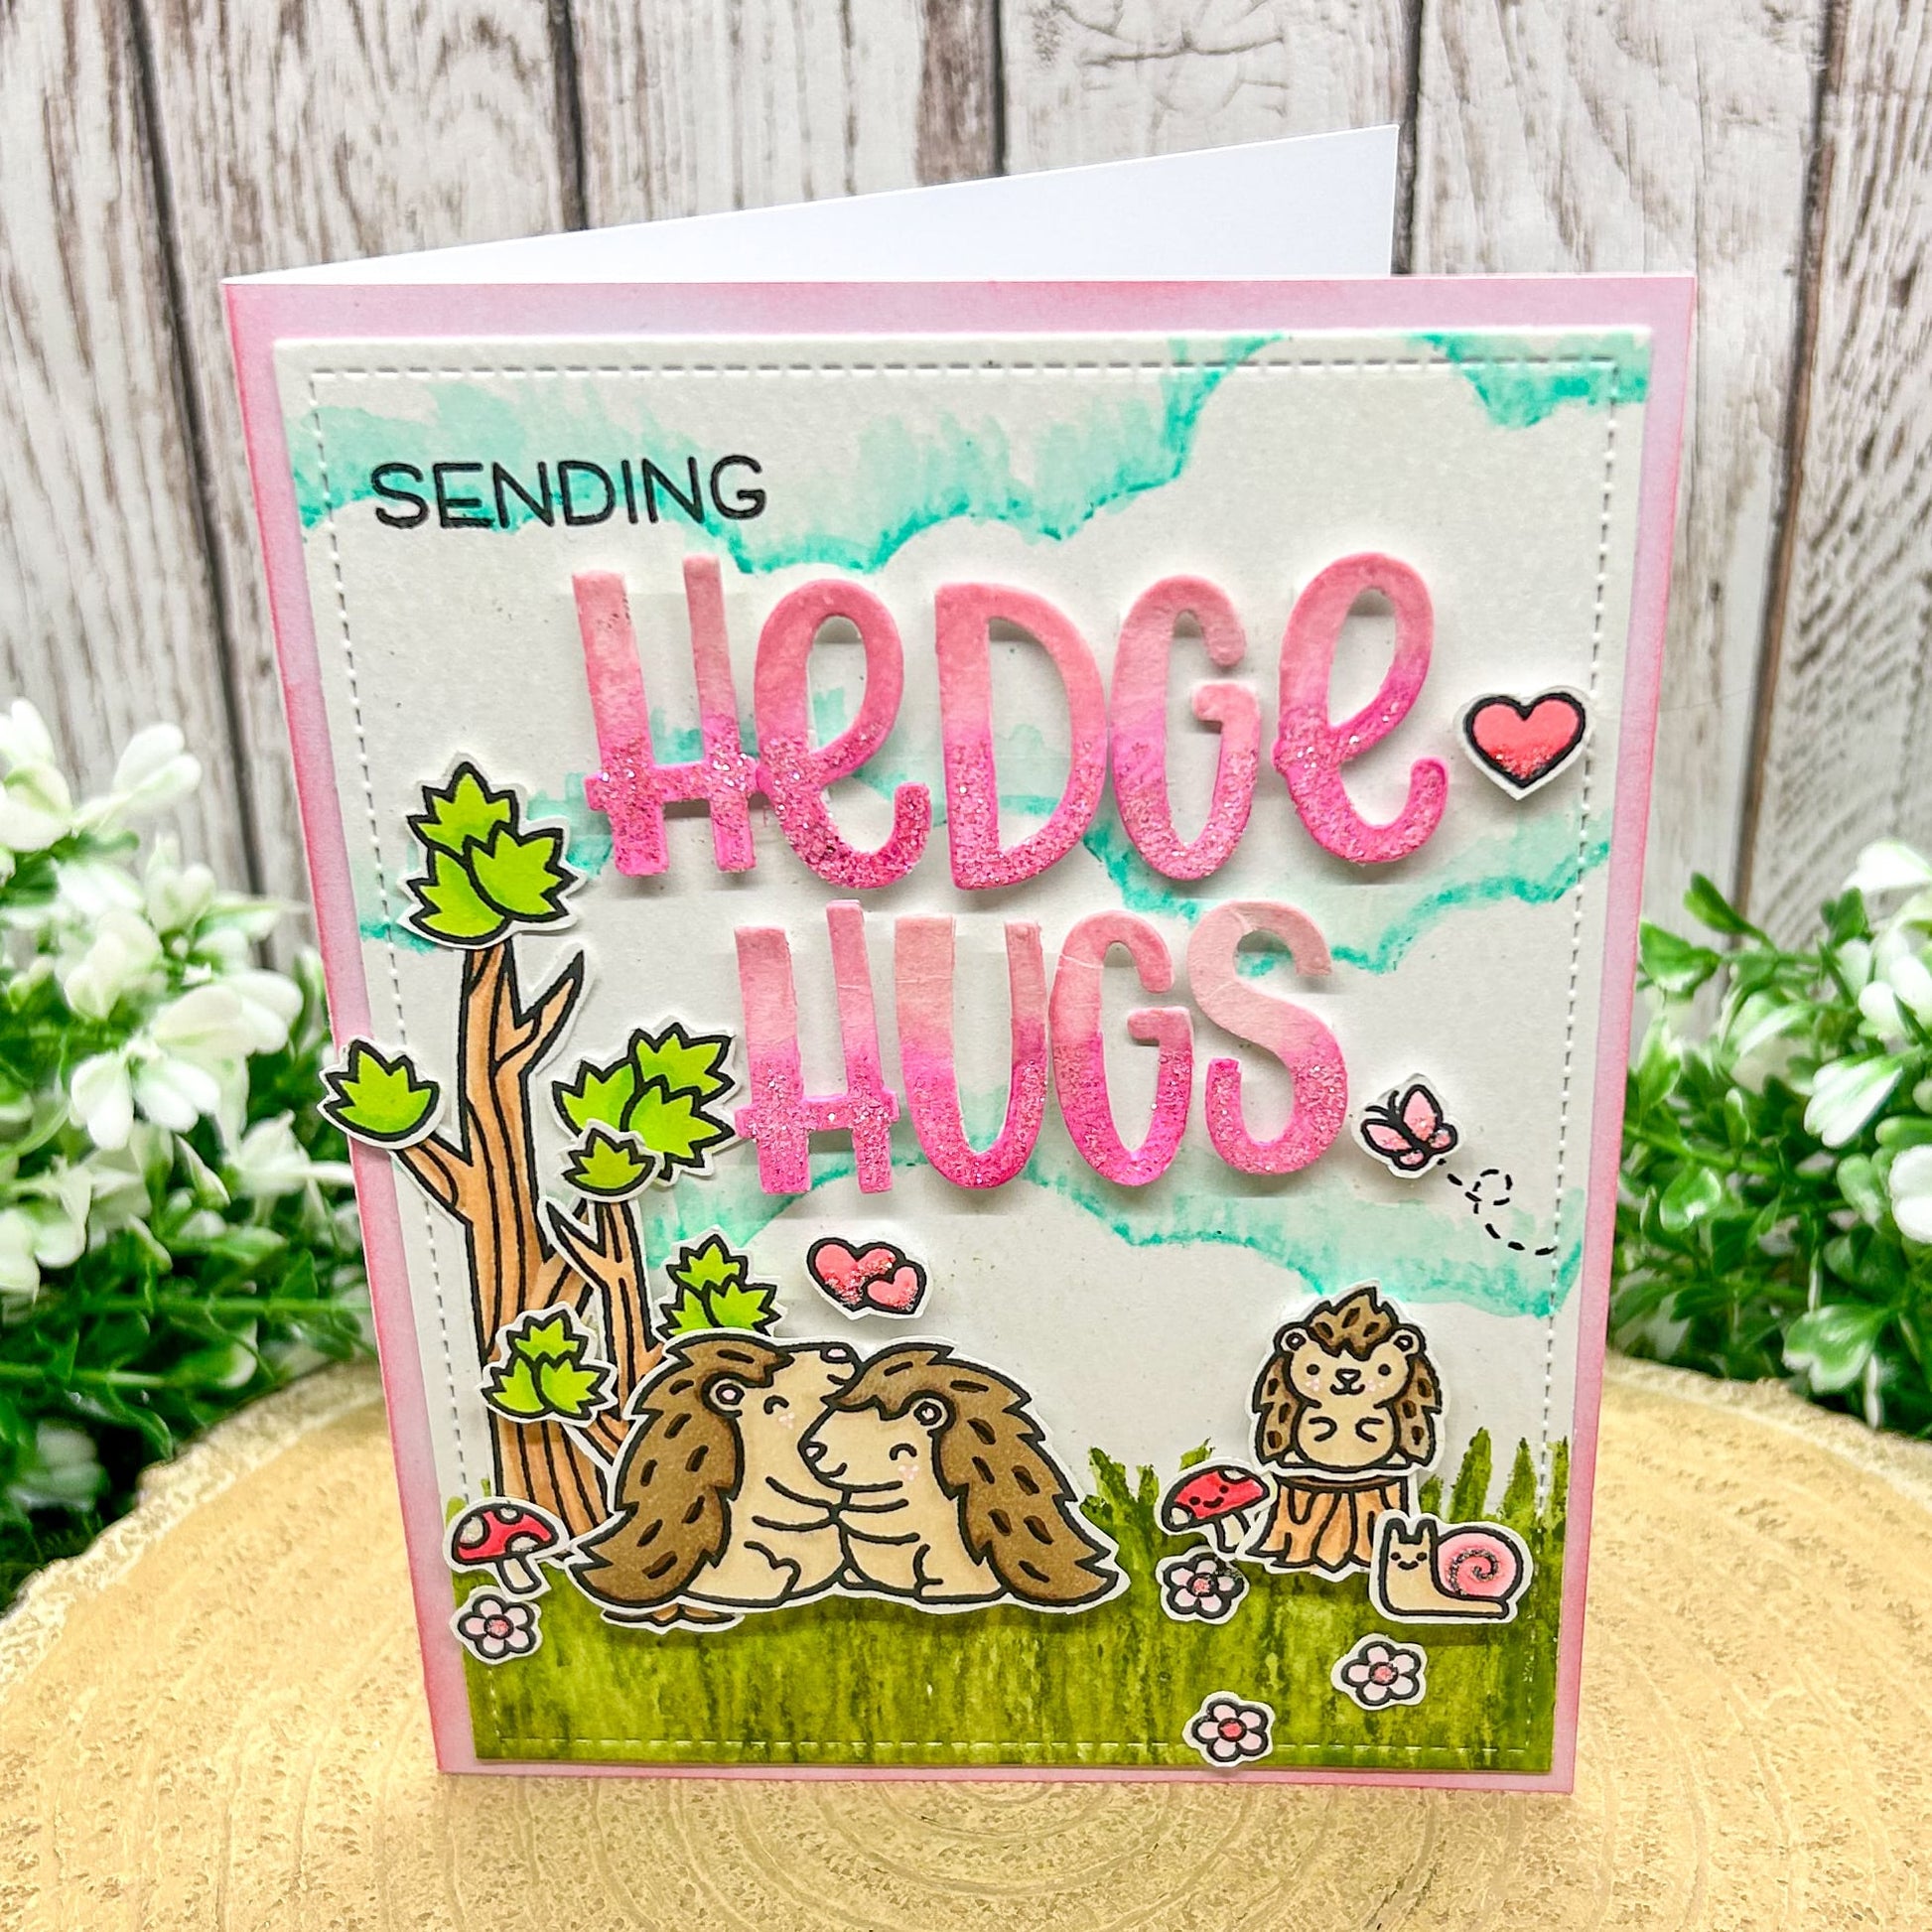 Sending Hedgedugs Handmade Card-1